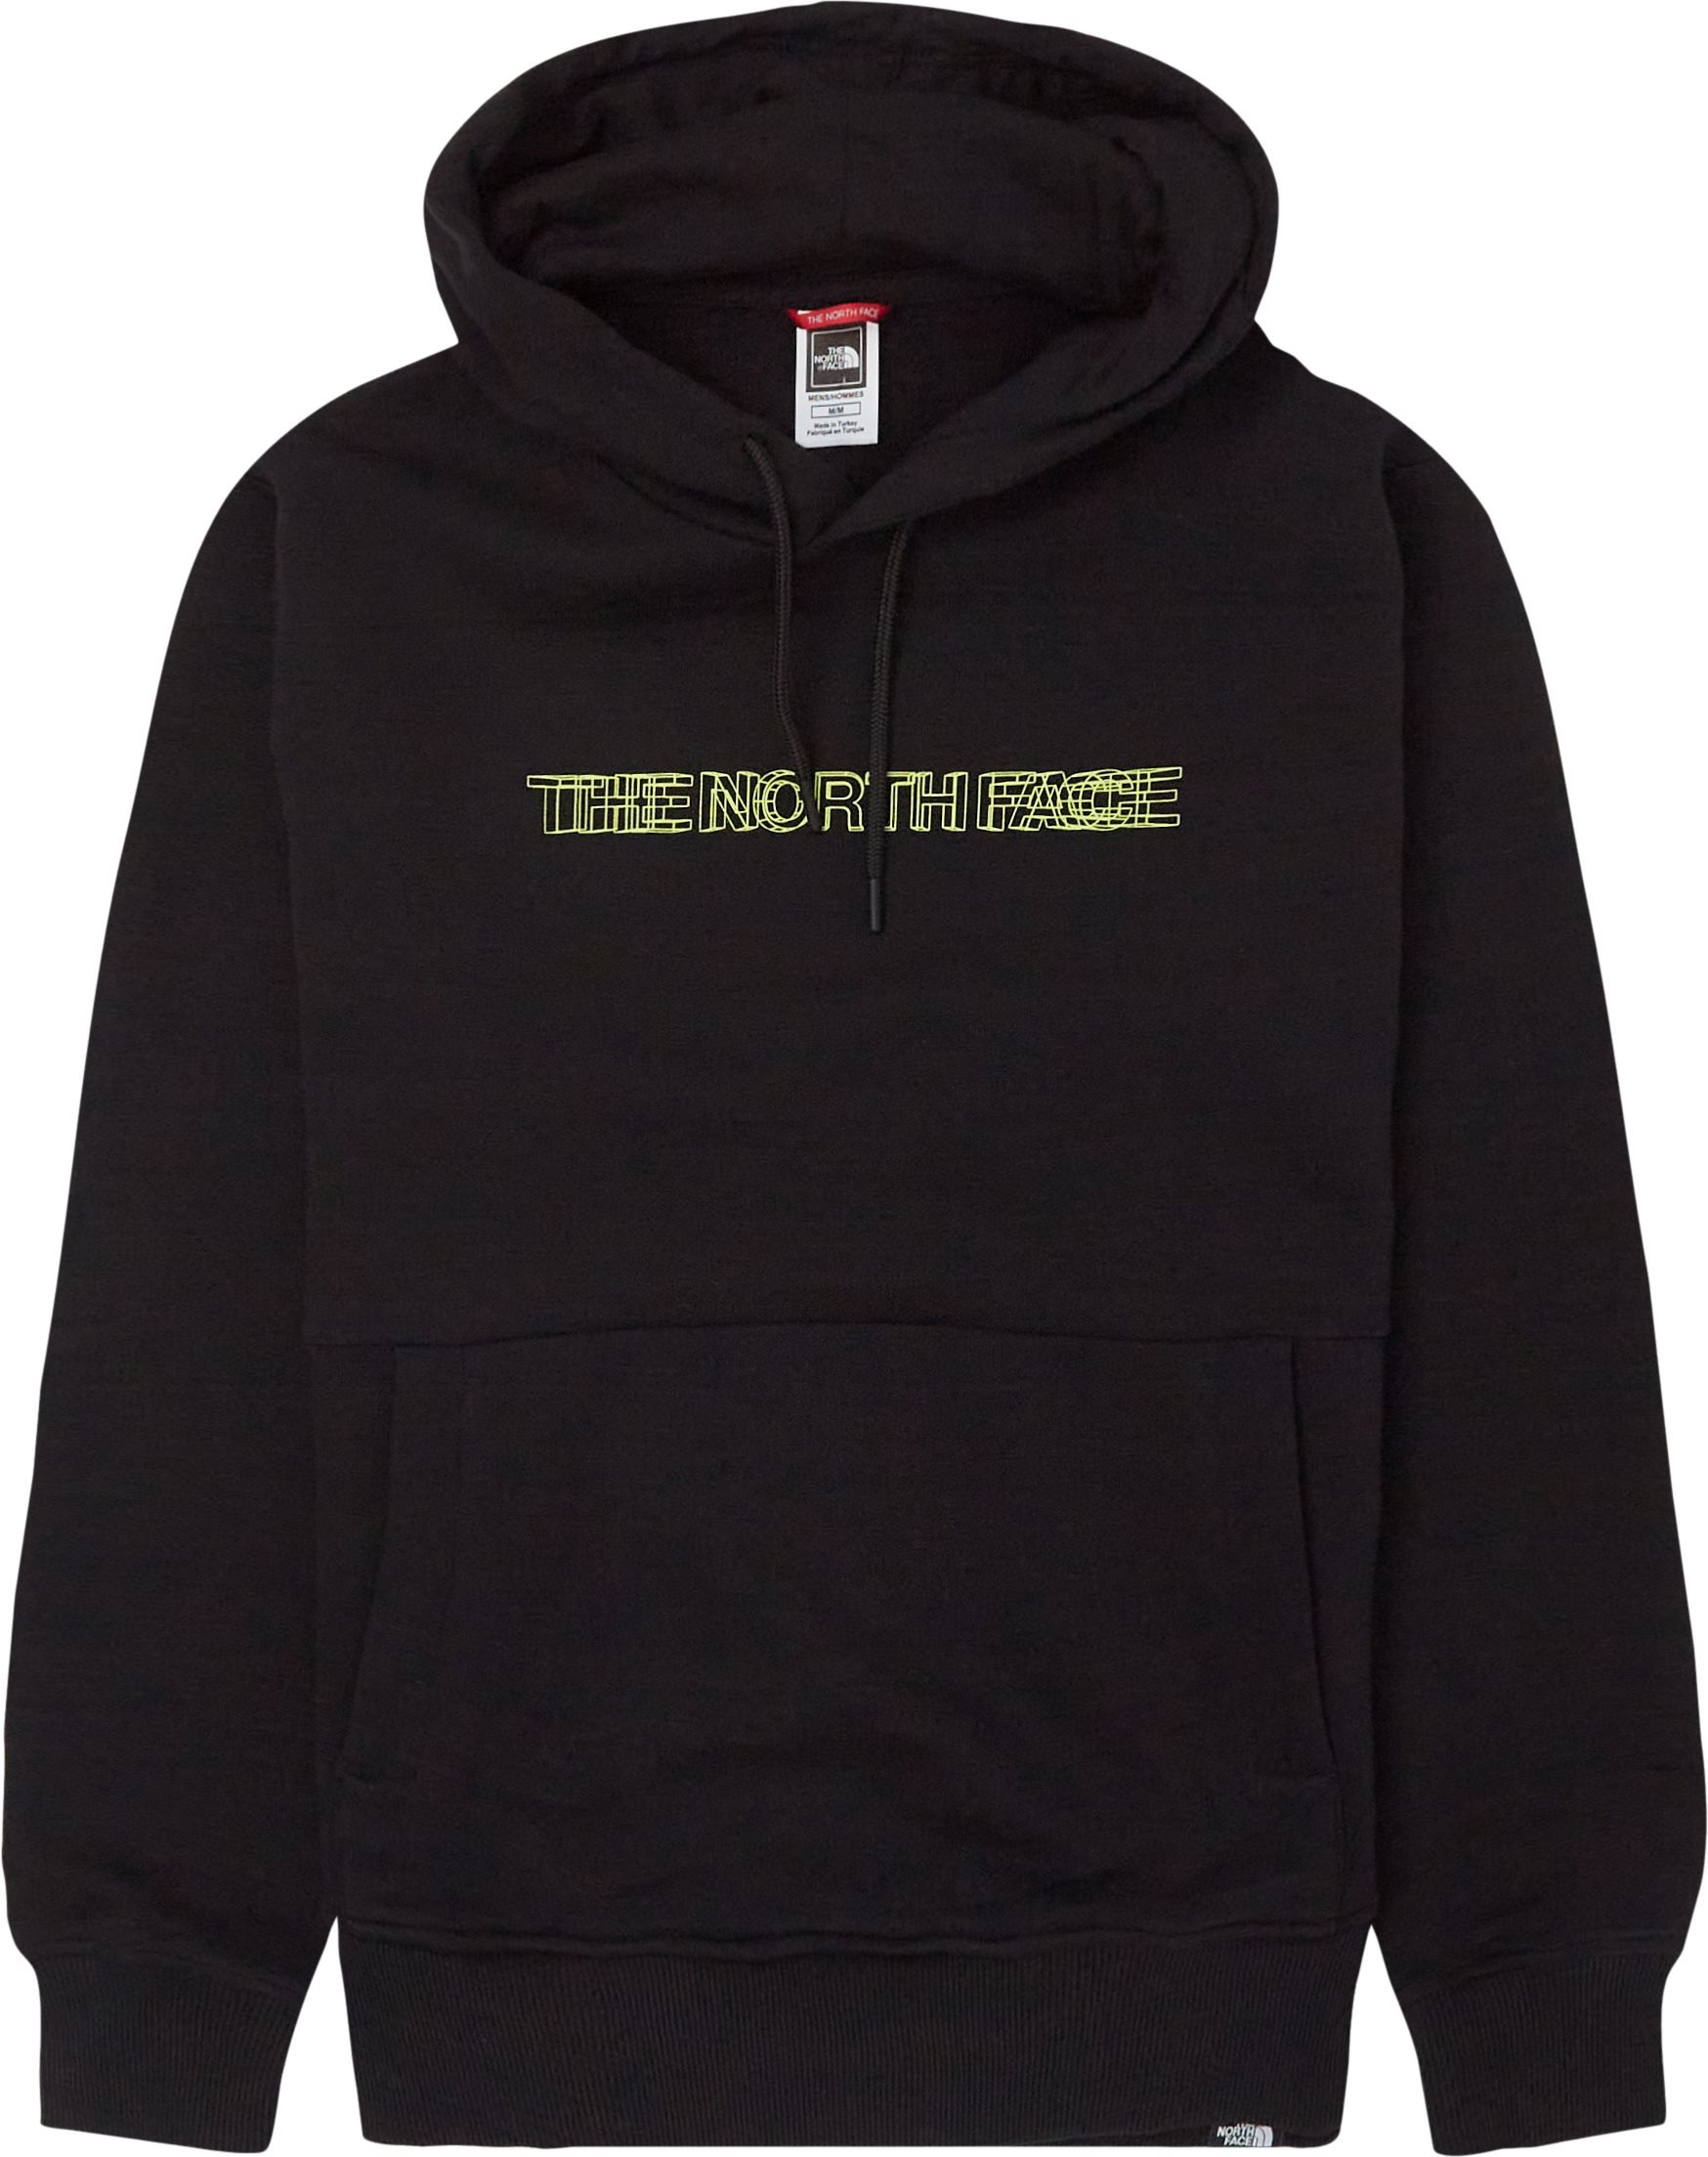 The North Face Sweatshirts COORDINATES HOODIE Black